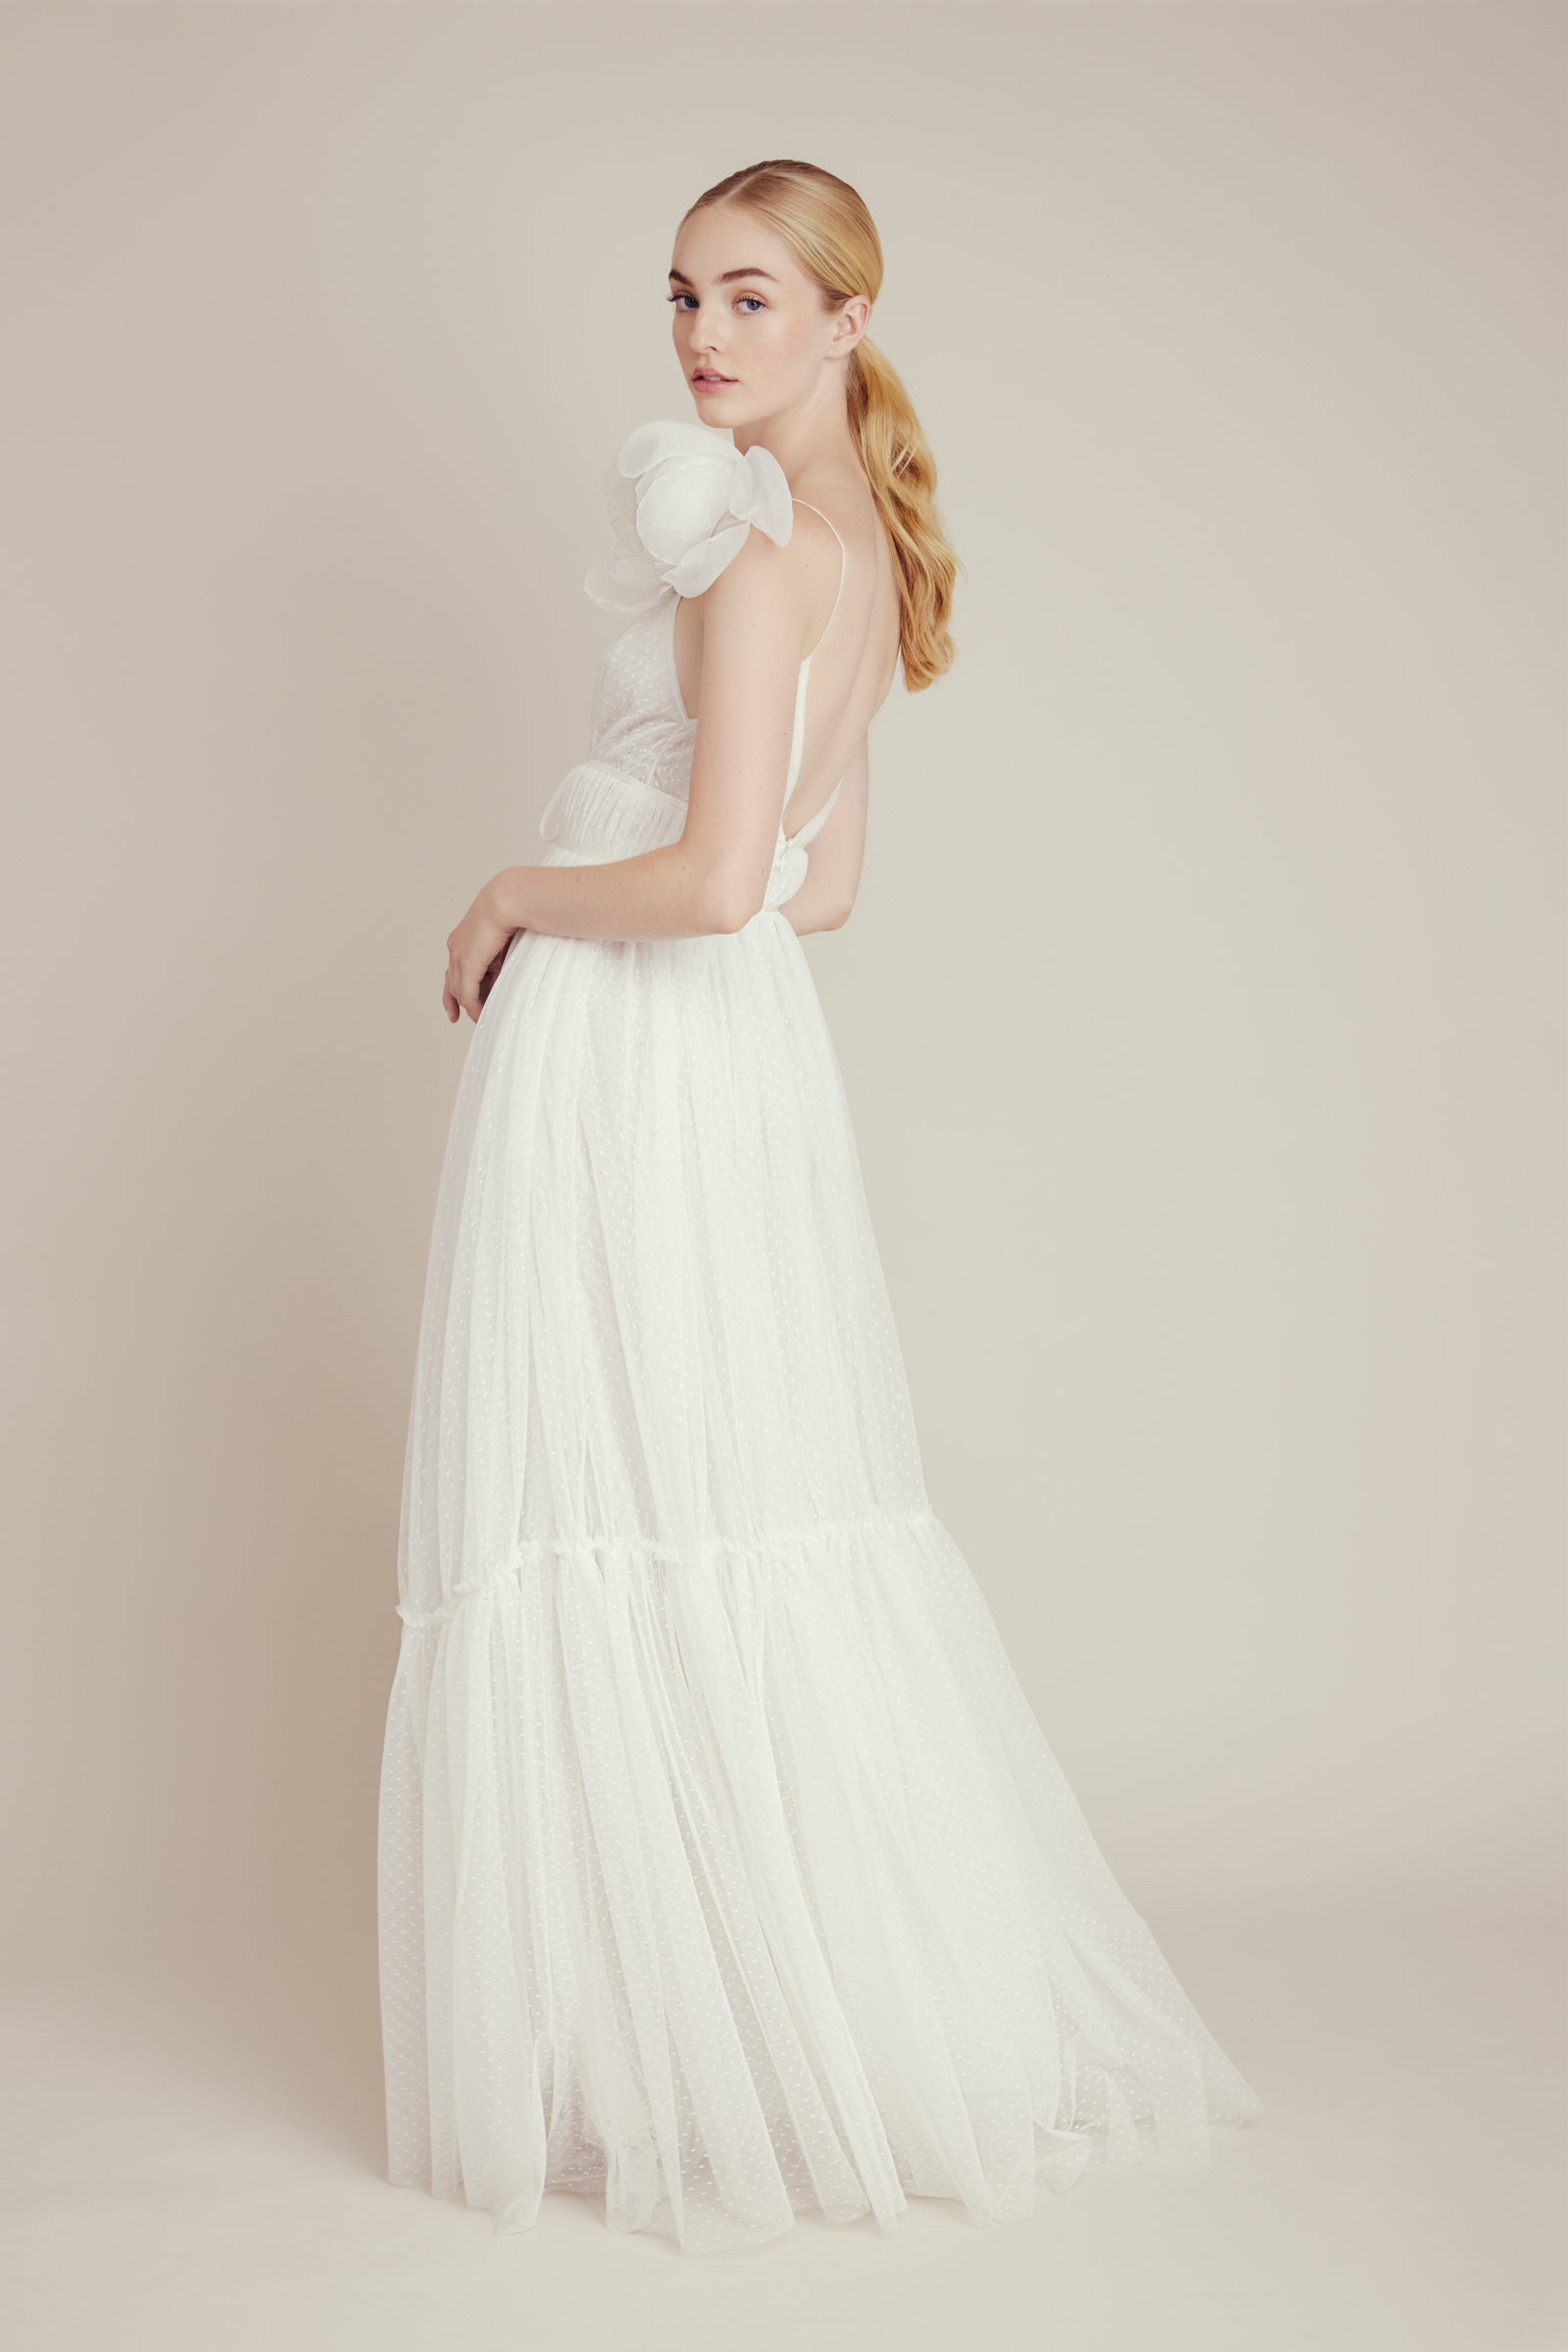 Lela Rose bridal gown